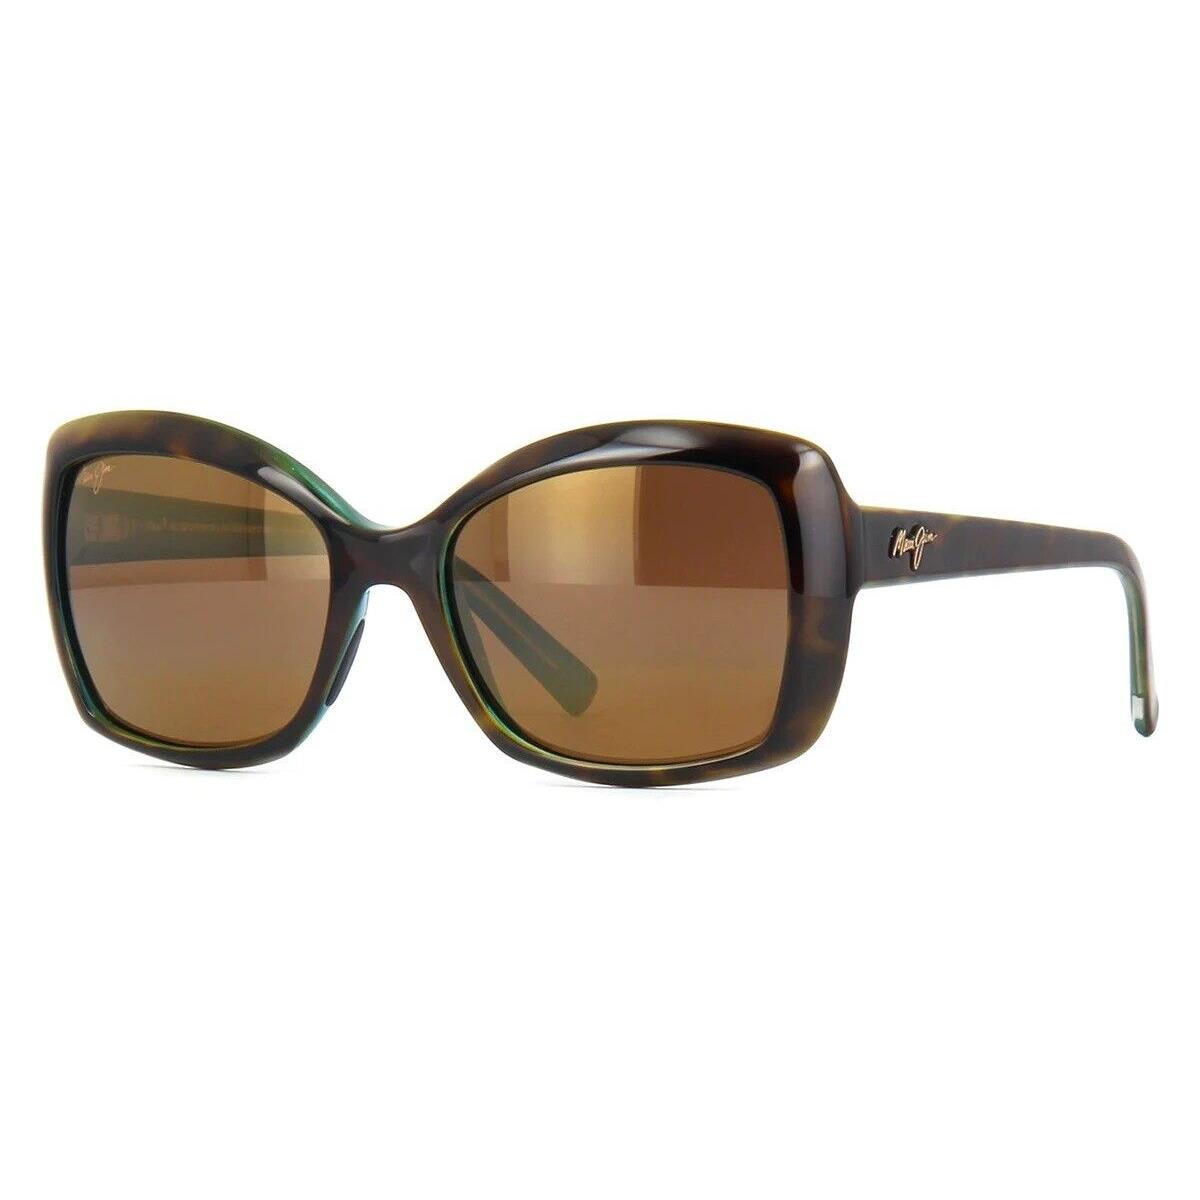 Maui Jim Orchid 735-10P Tortoise Frame/ Hcl Bronze Polarized Sunglasses